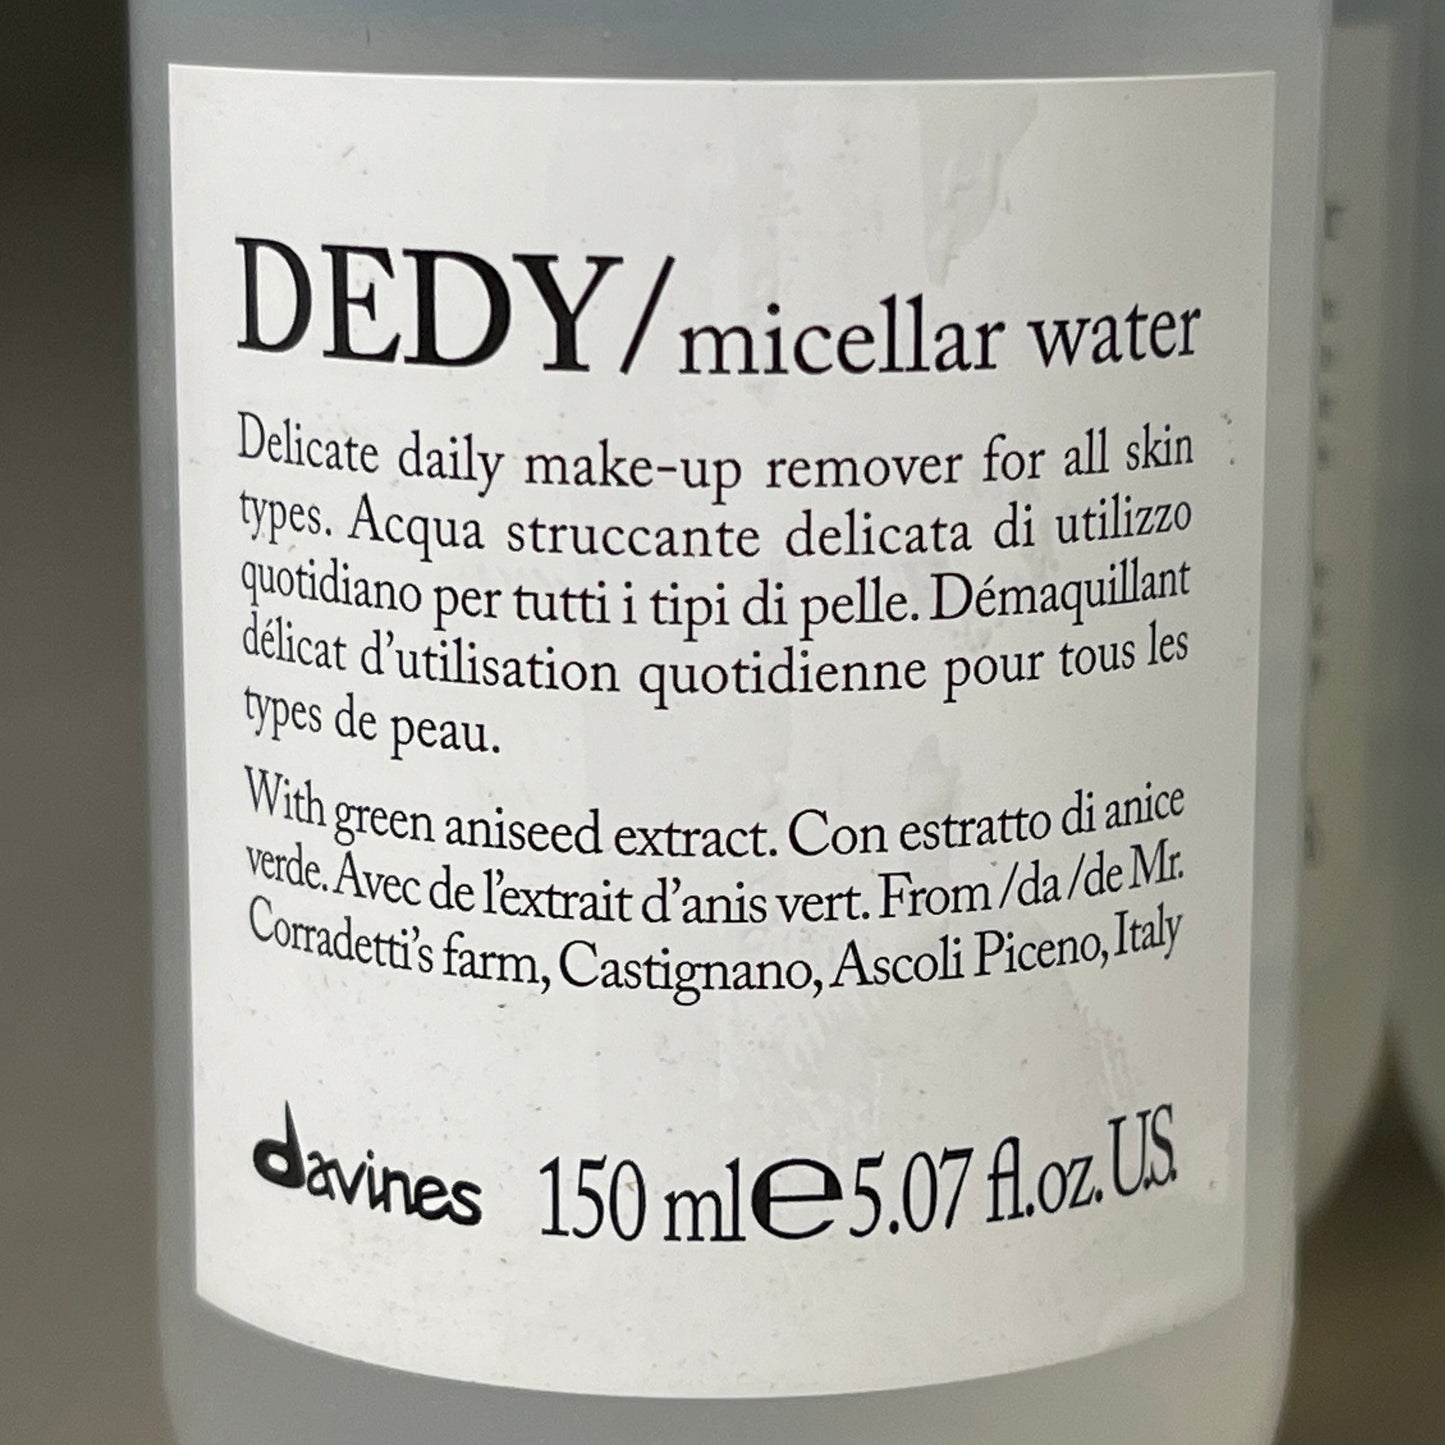 DAVINES Dedy Micellar Water 5.07 fl oz/150ml 75573 (New)